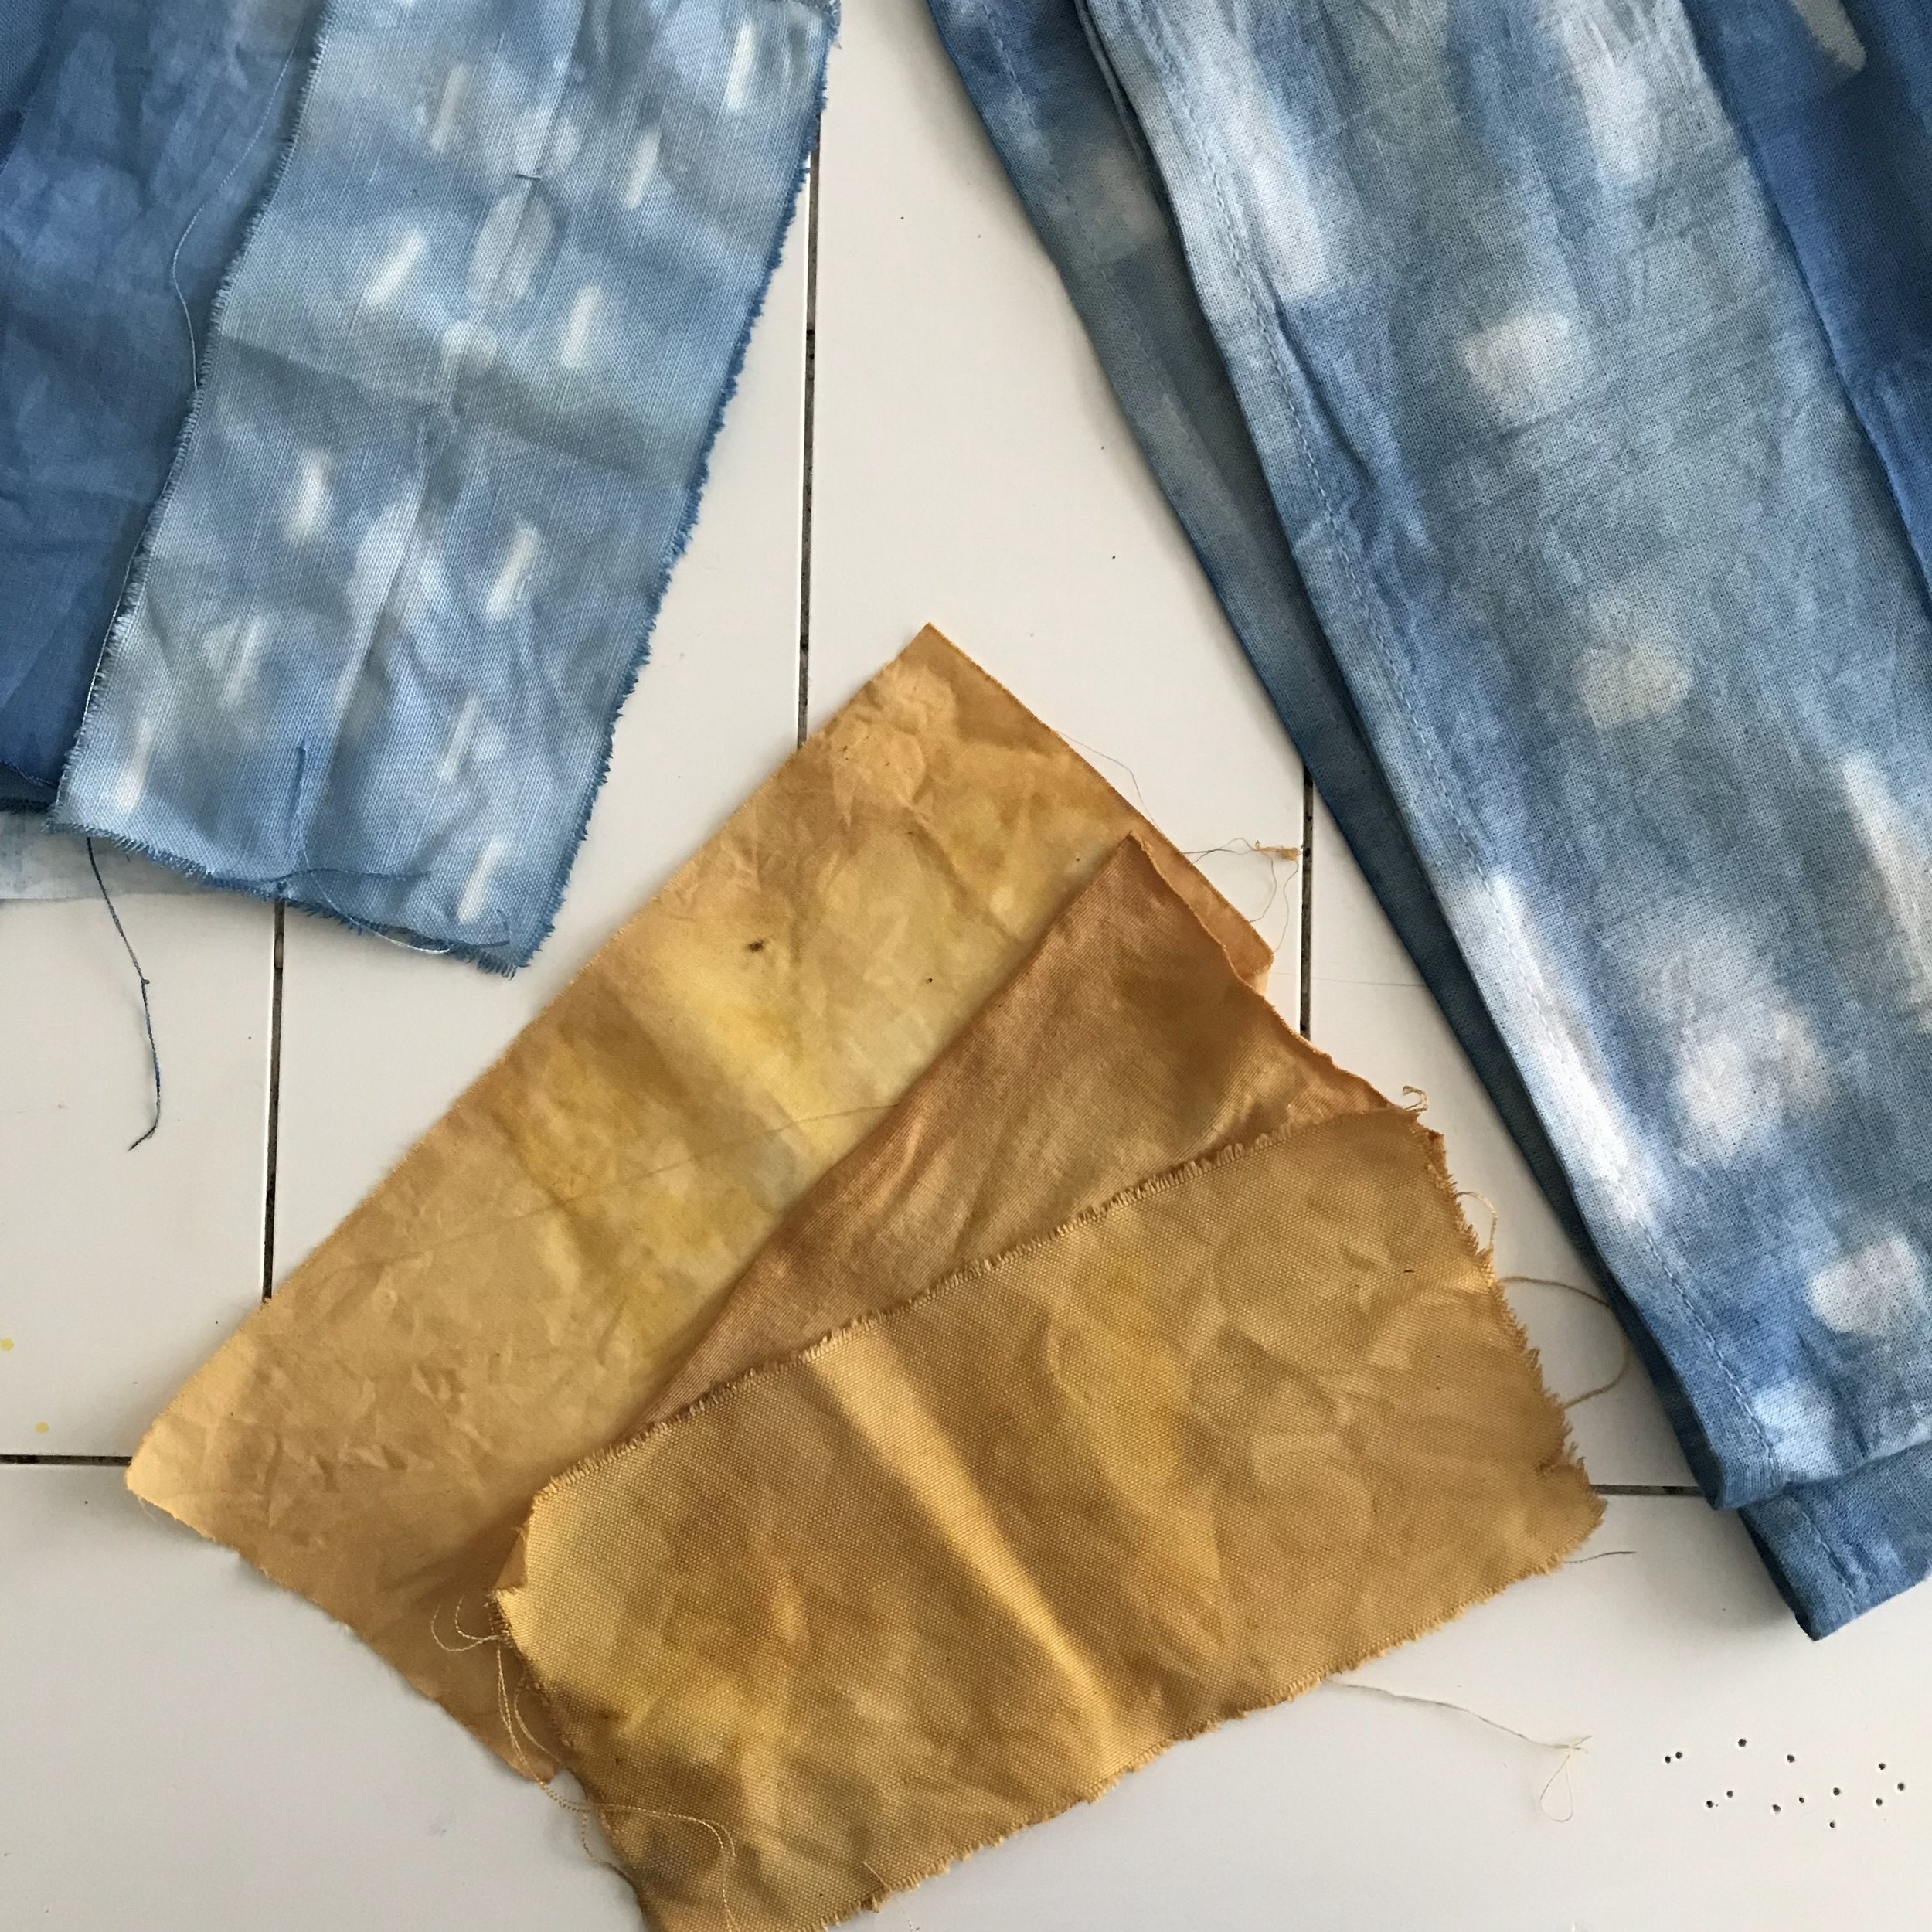  Indigo and onion skin-dyed fabric samples 